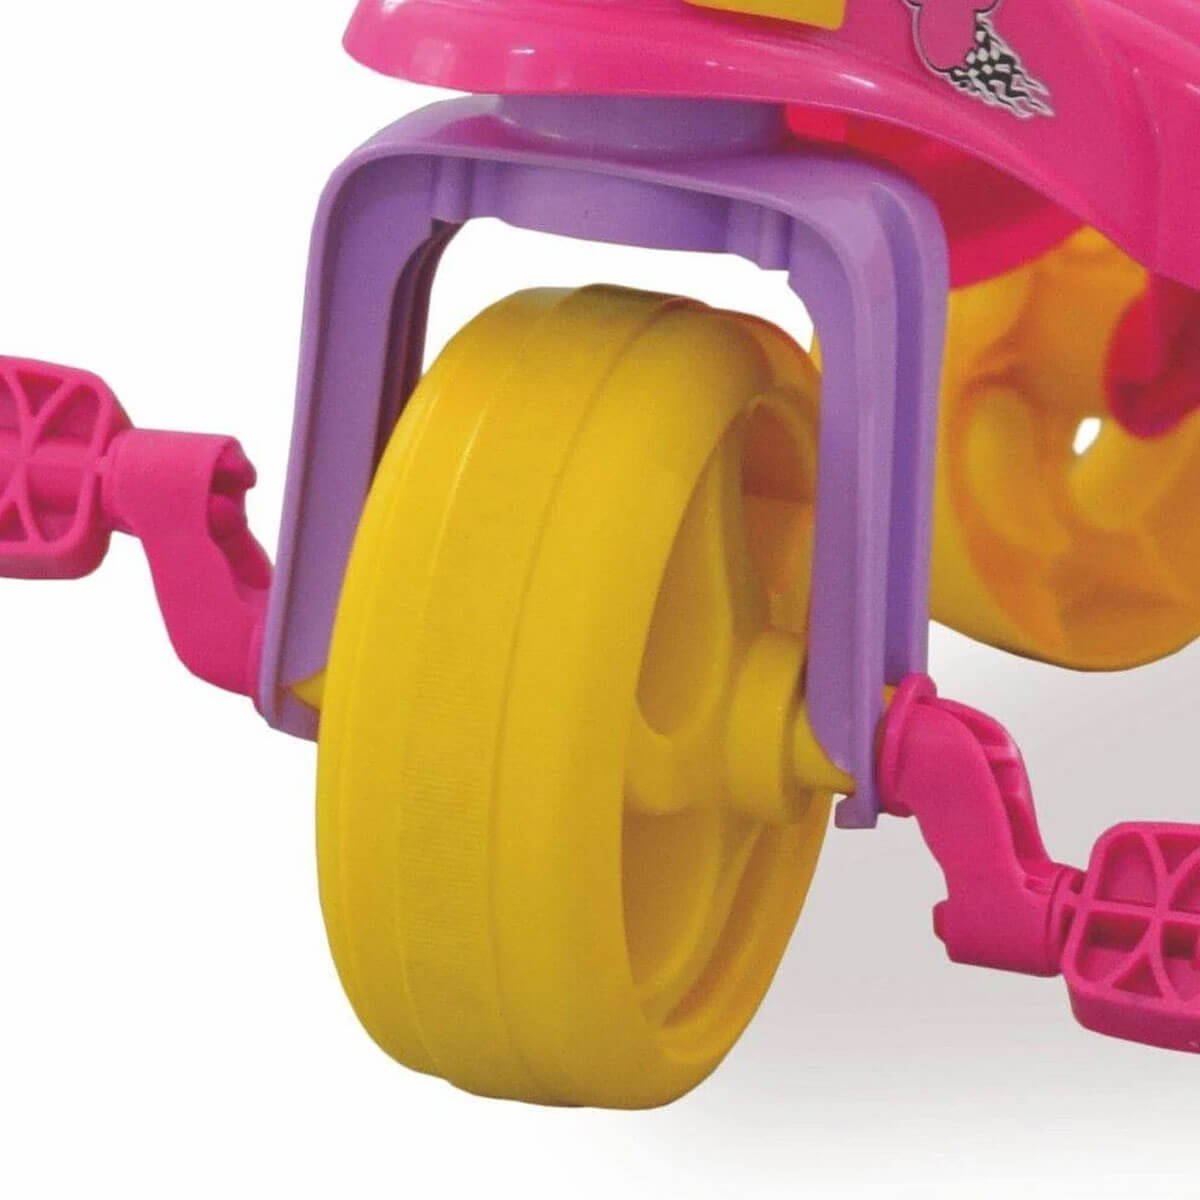 Triciclo Motoca Infantil Croco Racer - Xalingo 7754 - Pirlimpimpim  Brinquedos